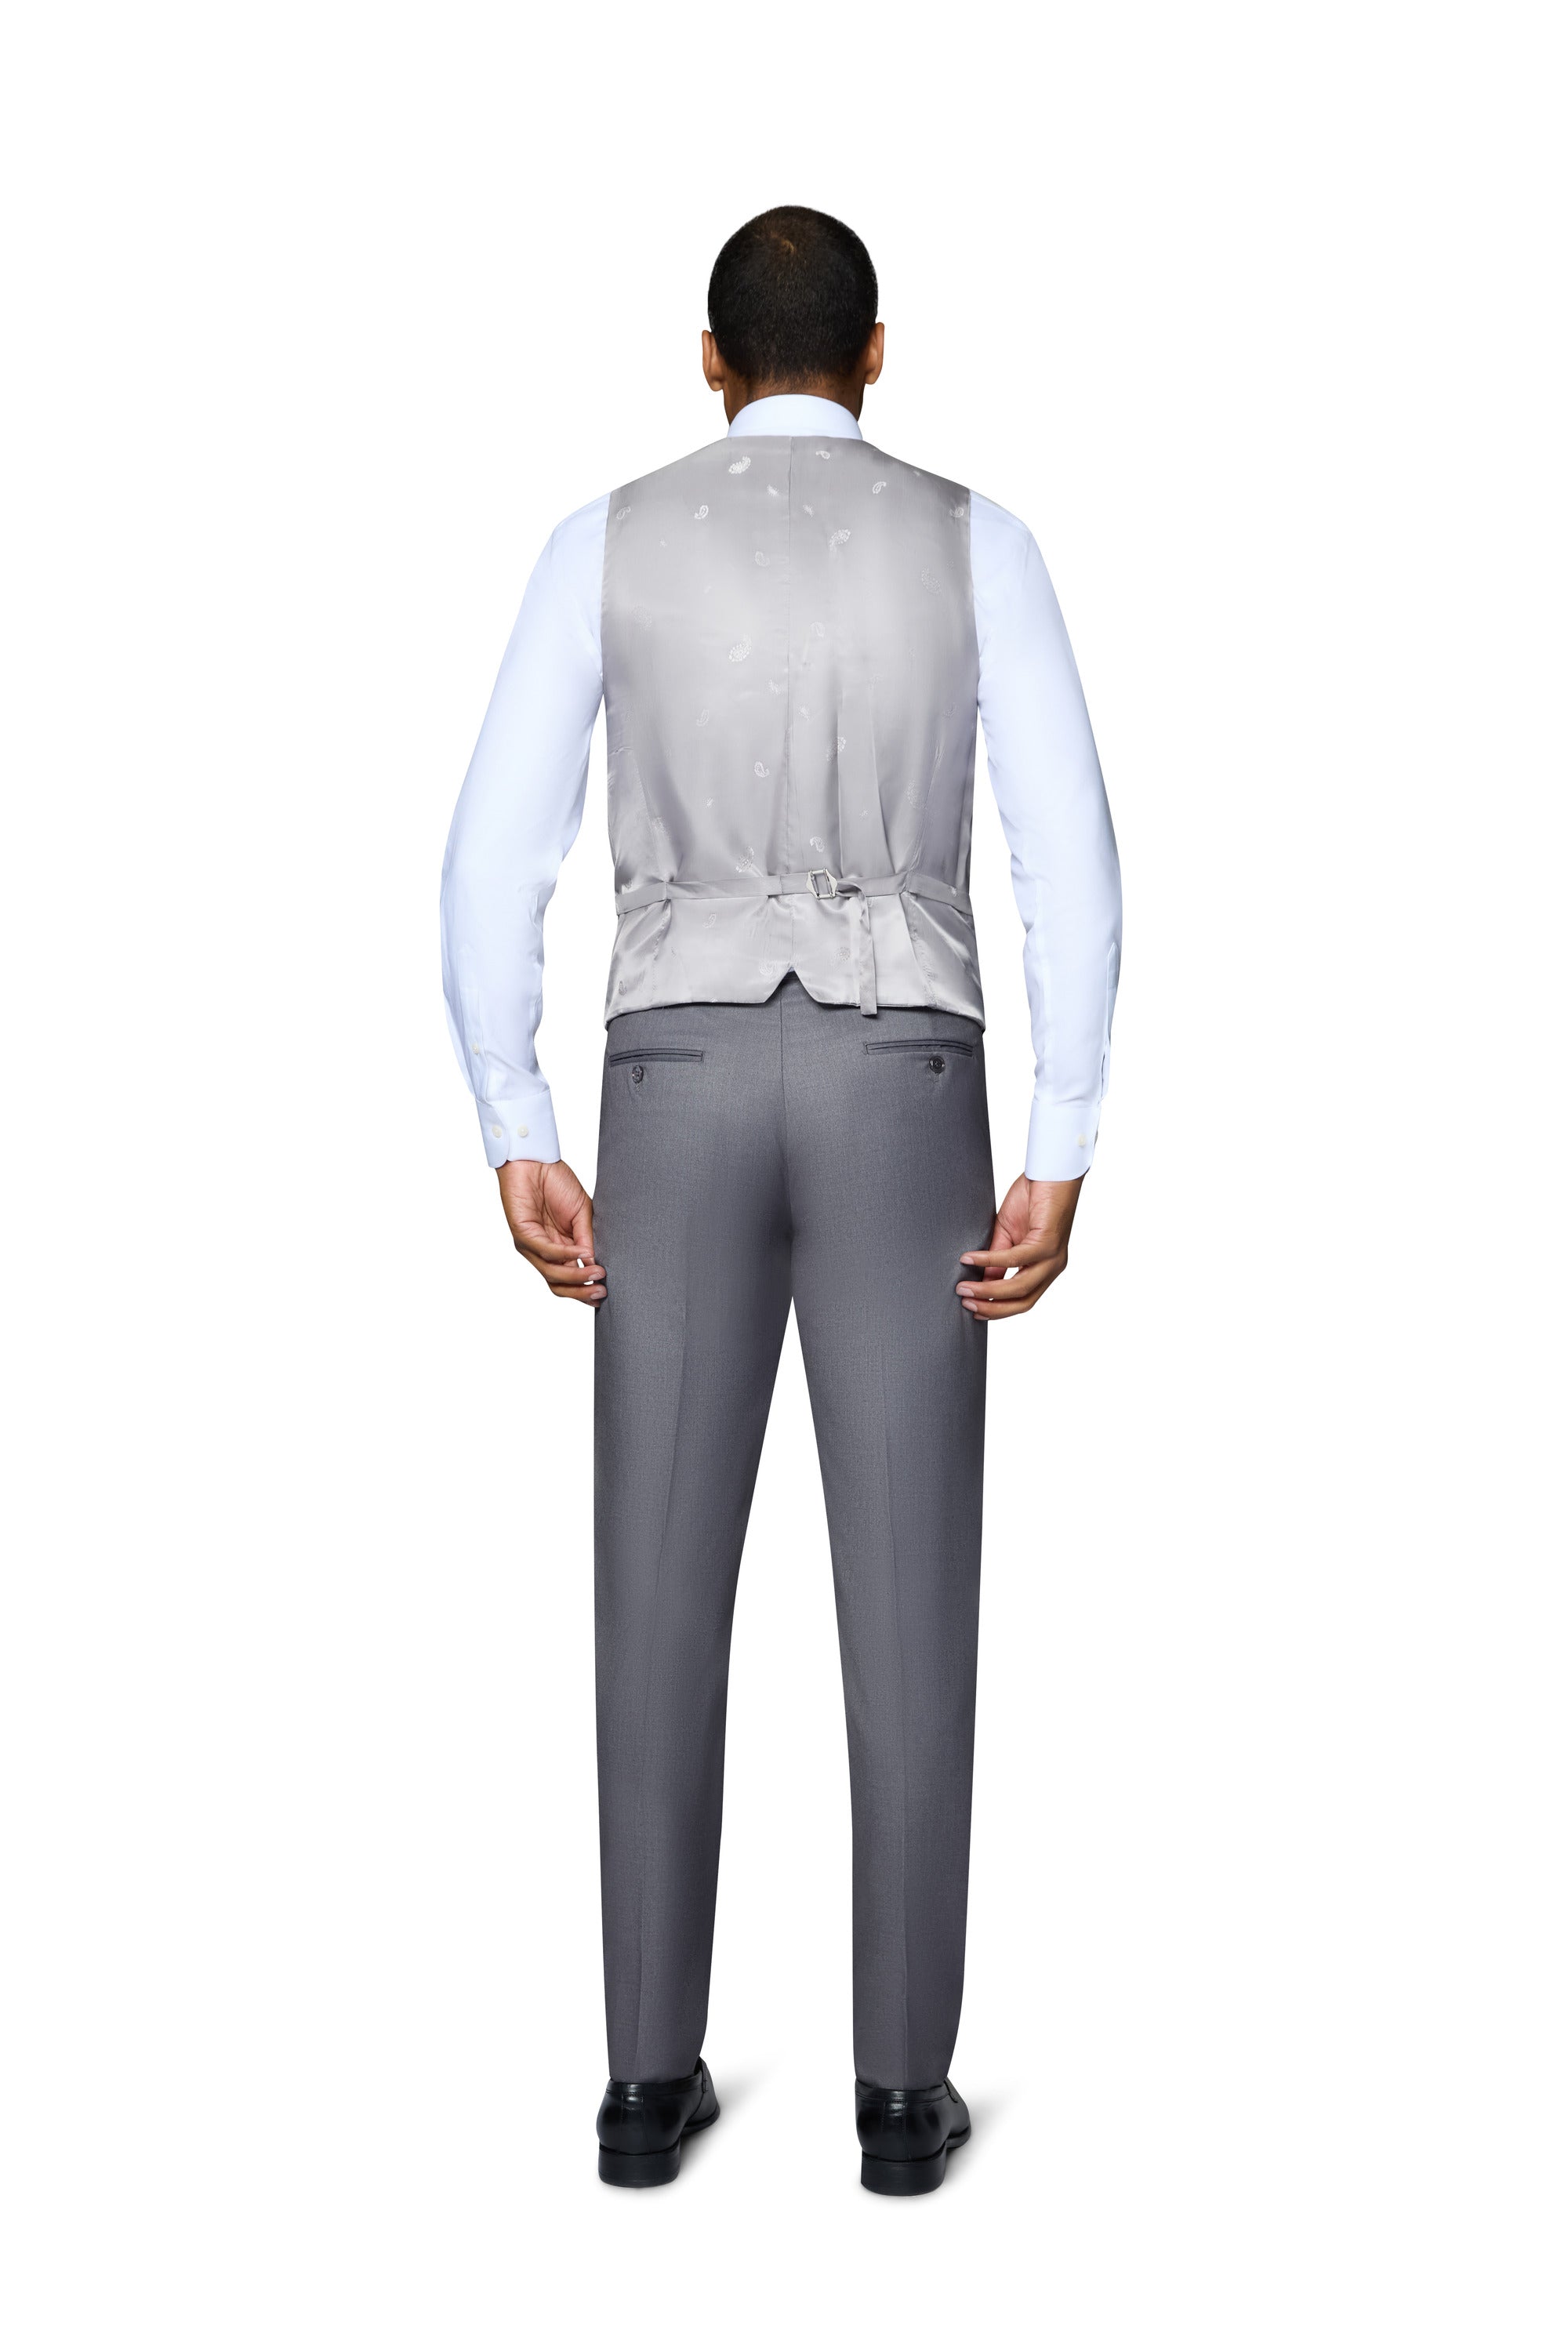 Berragamo Solid Slim Fit Pants - Medium Grey